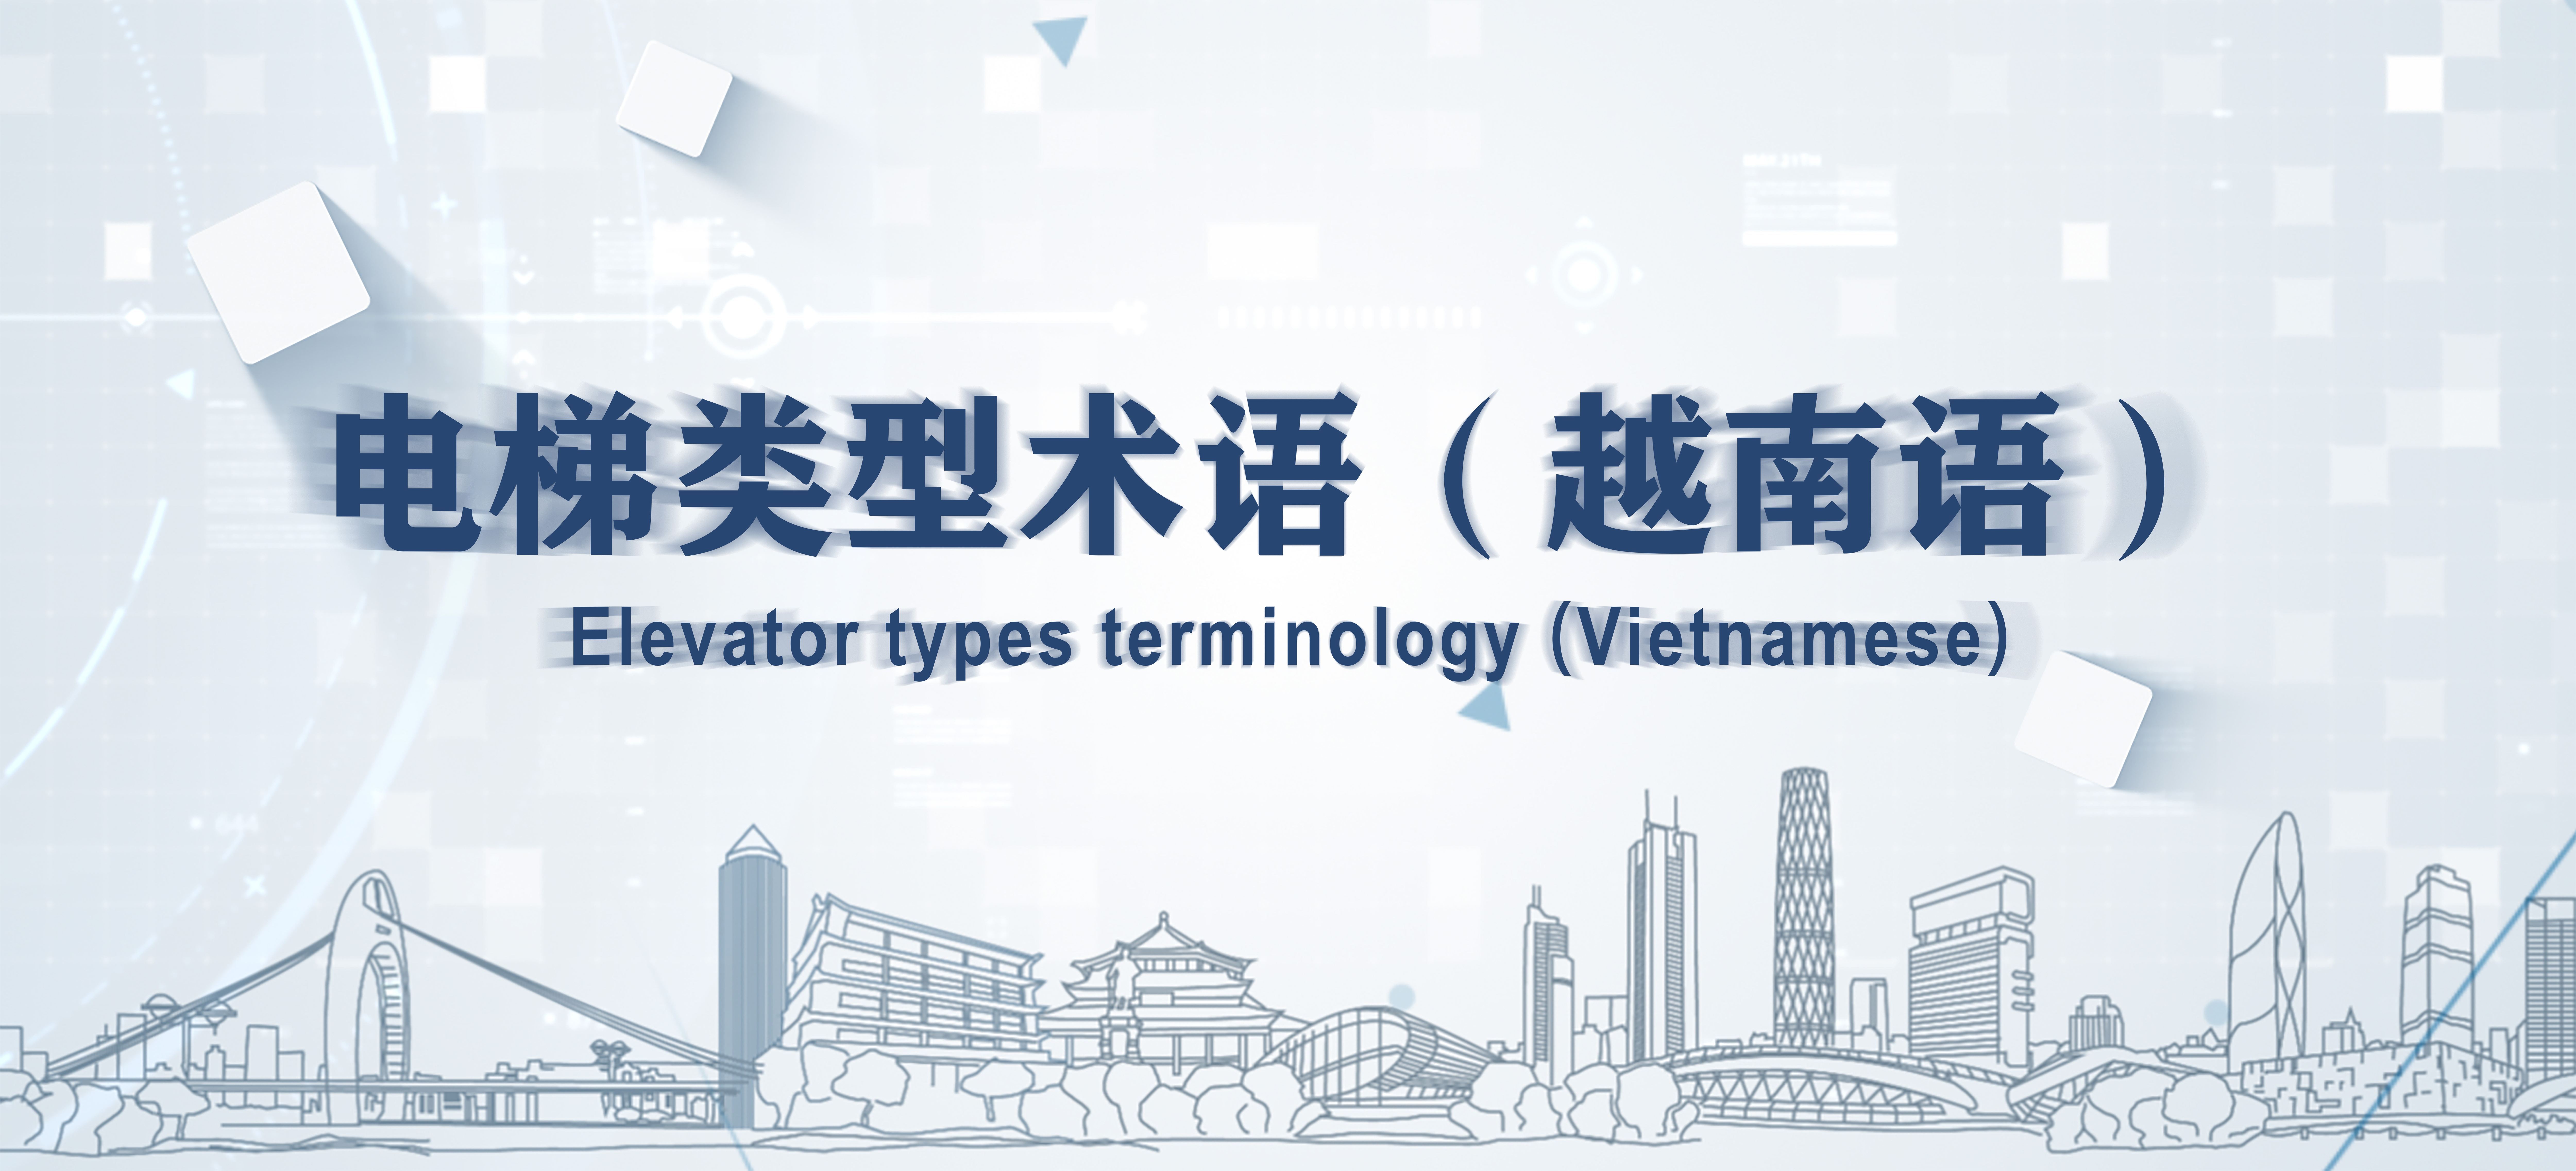 Elevator types terminology (Vietnamese)